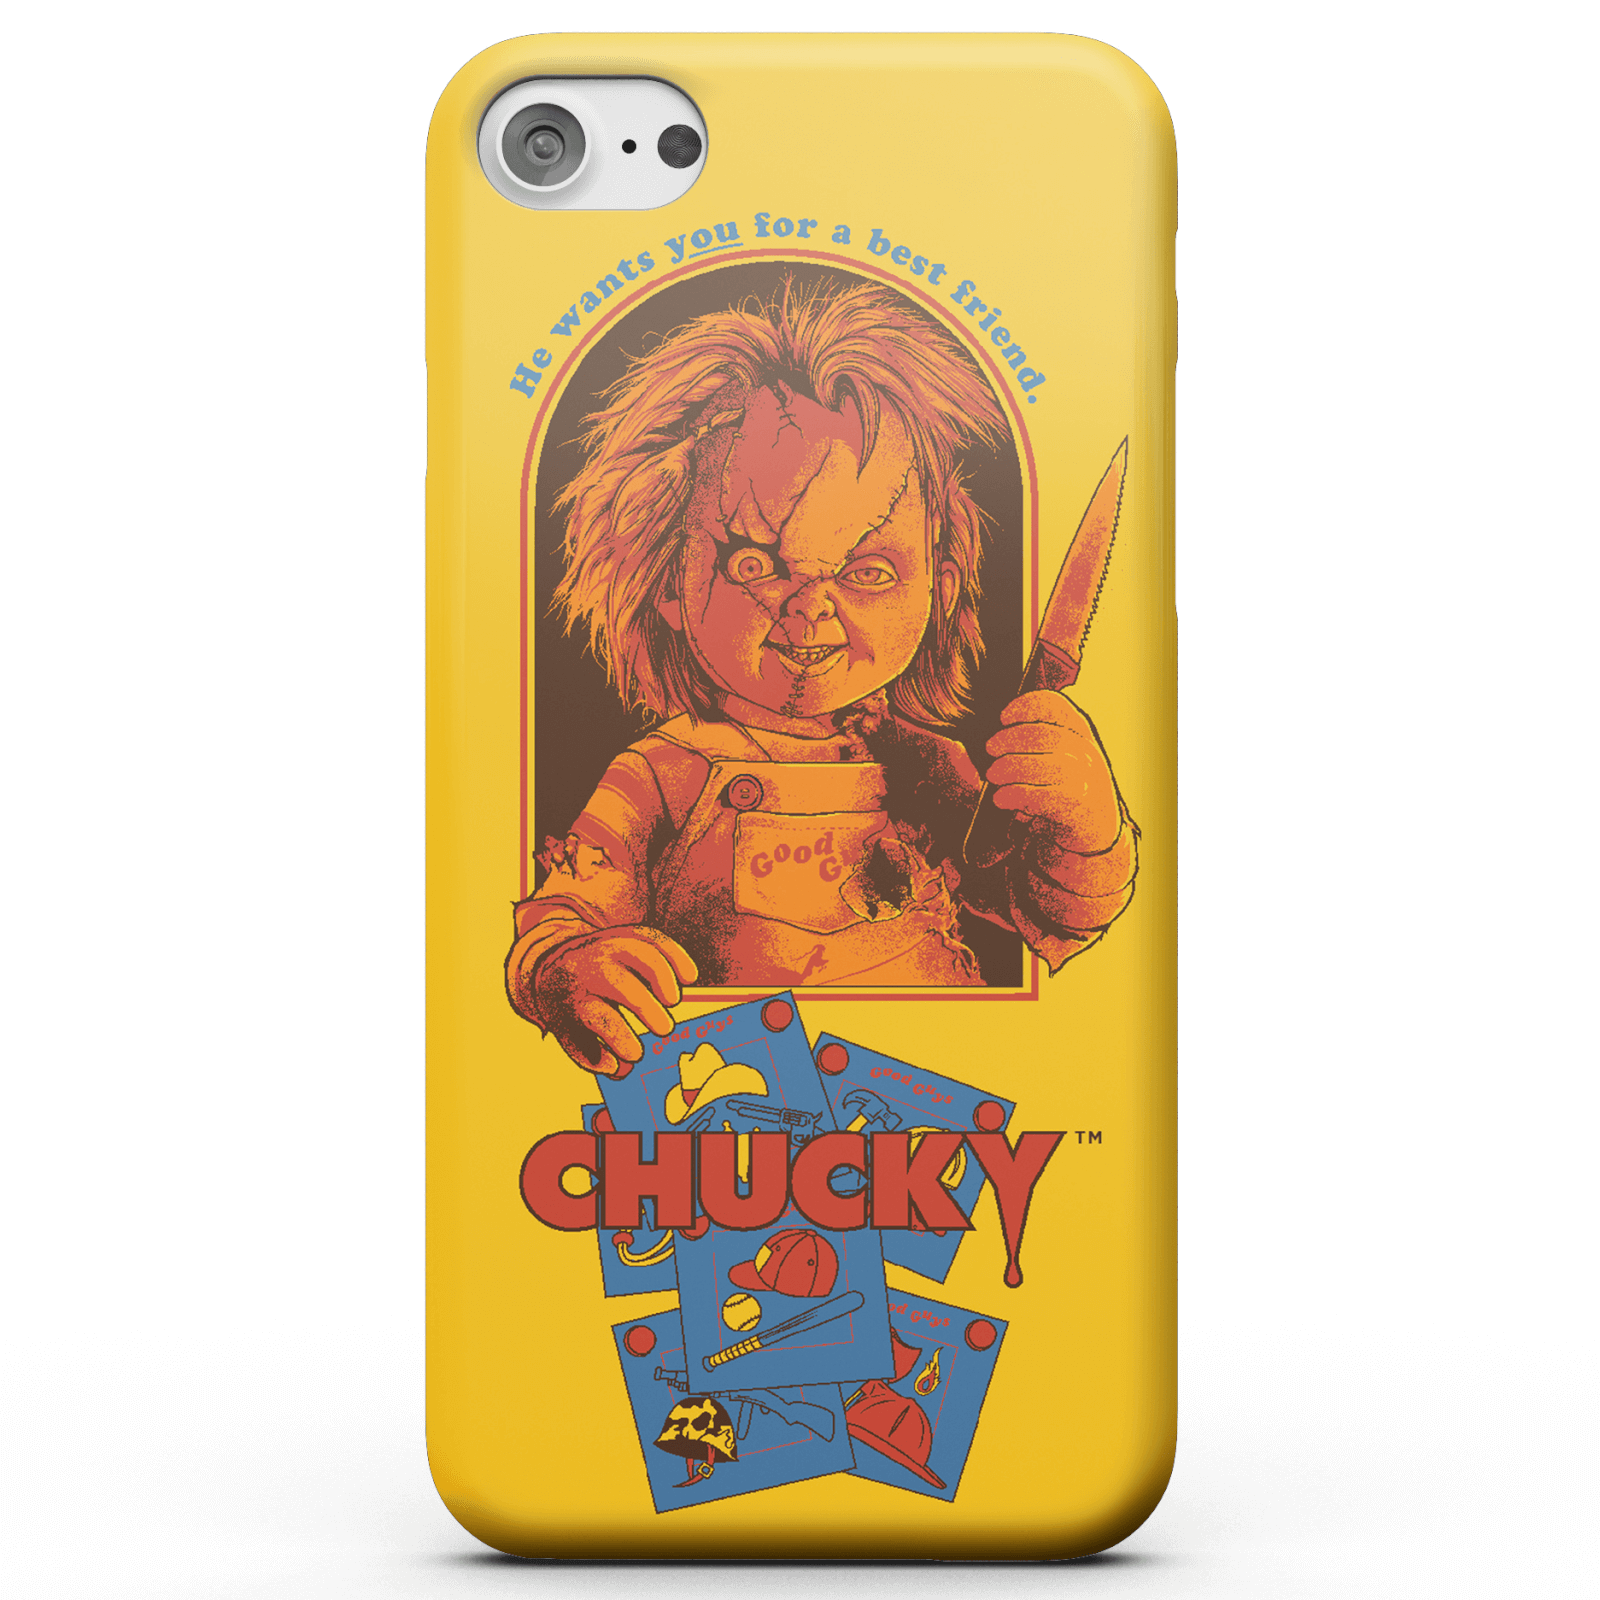 Funda Móvil Chucky Out Of The Box para iPhone y Android - iPhone 8 - Carcasa rígida - Brillante